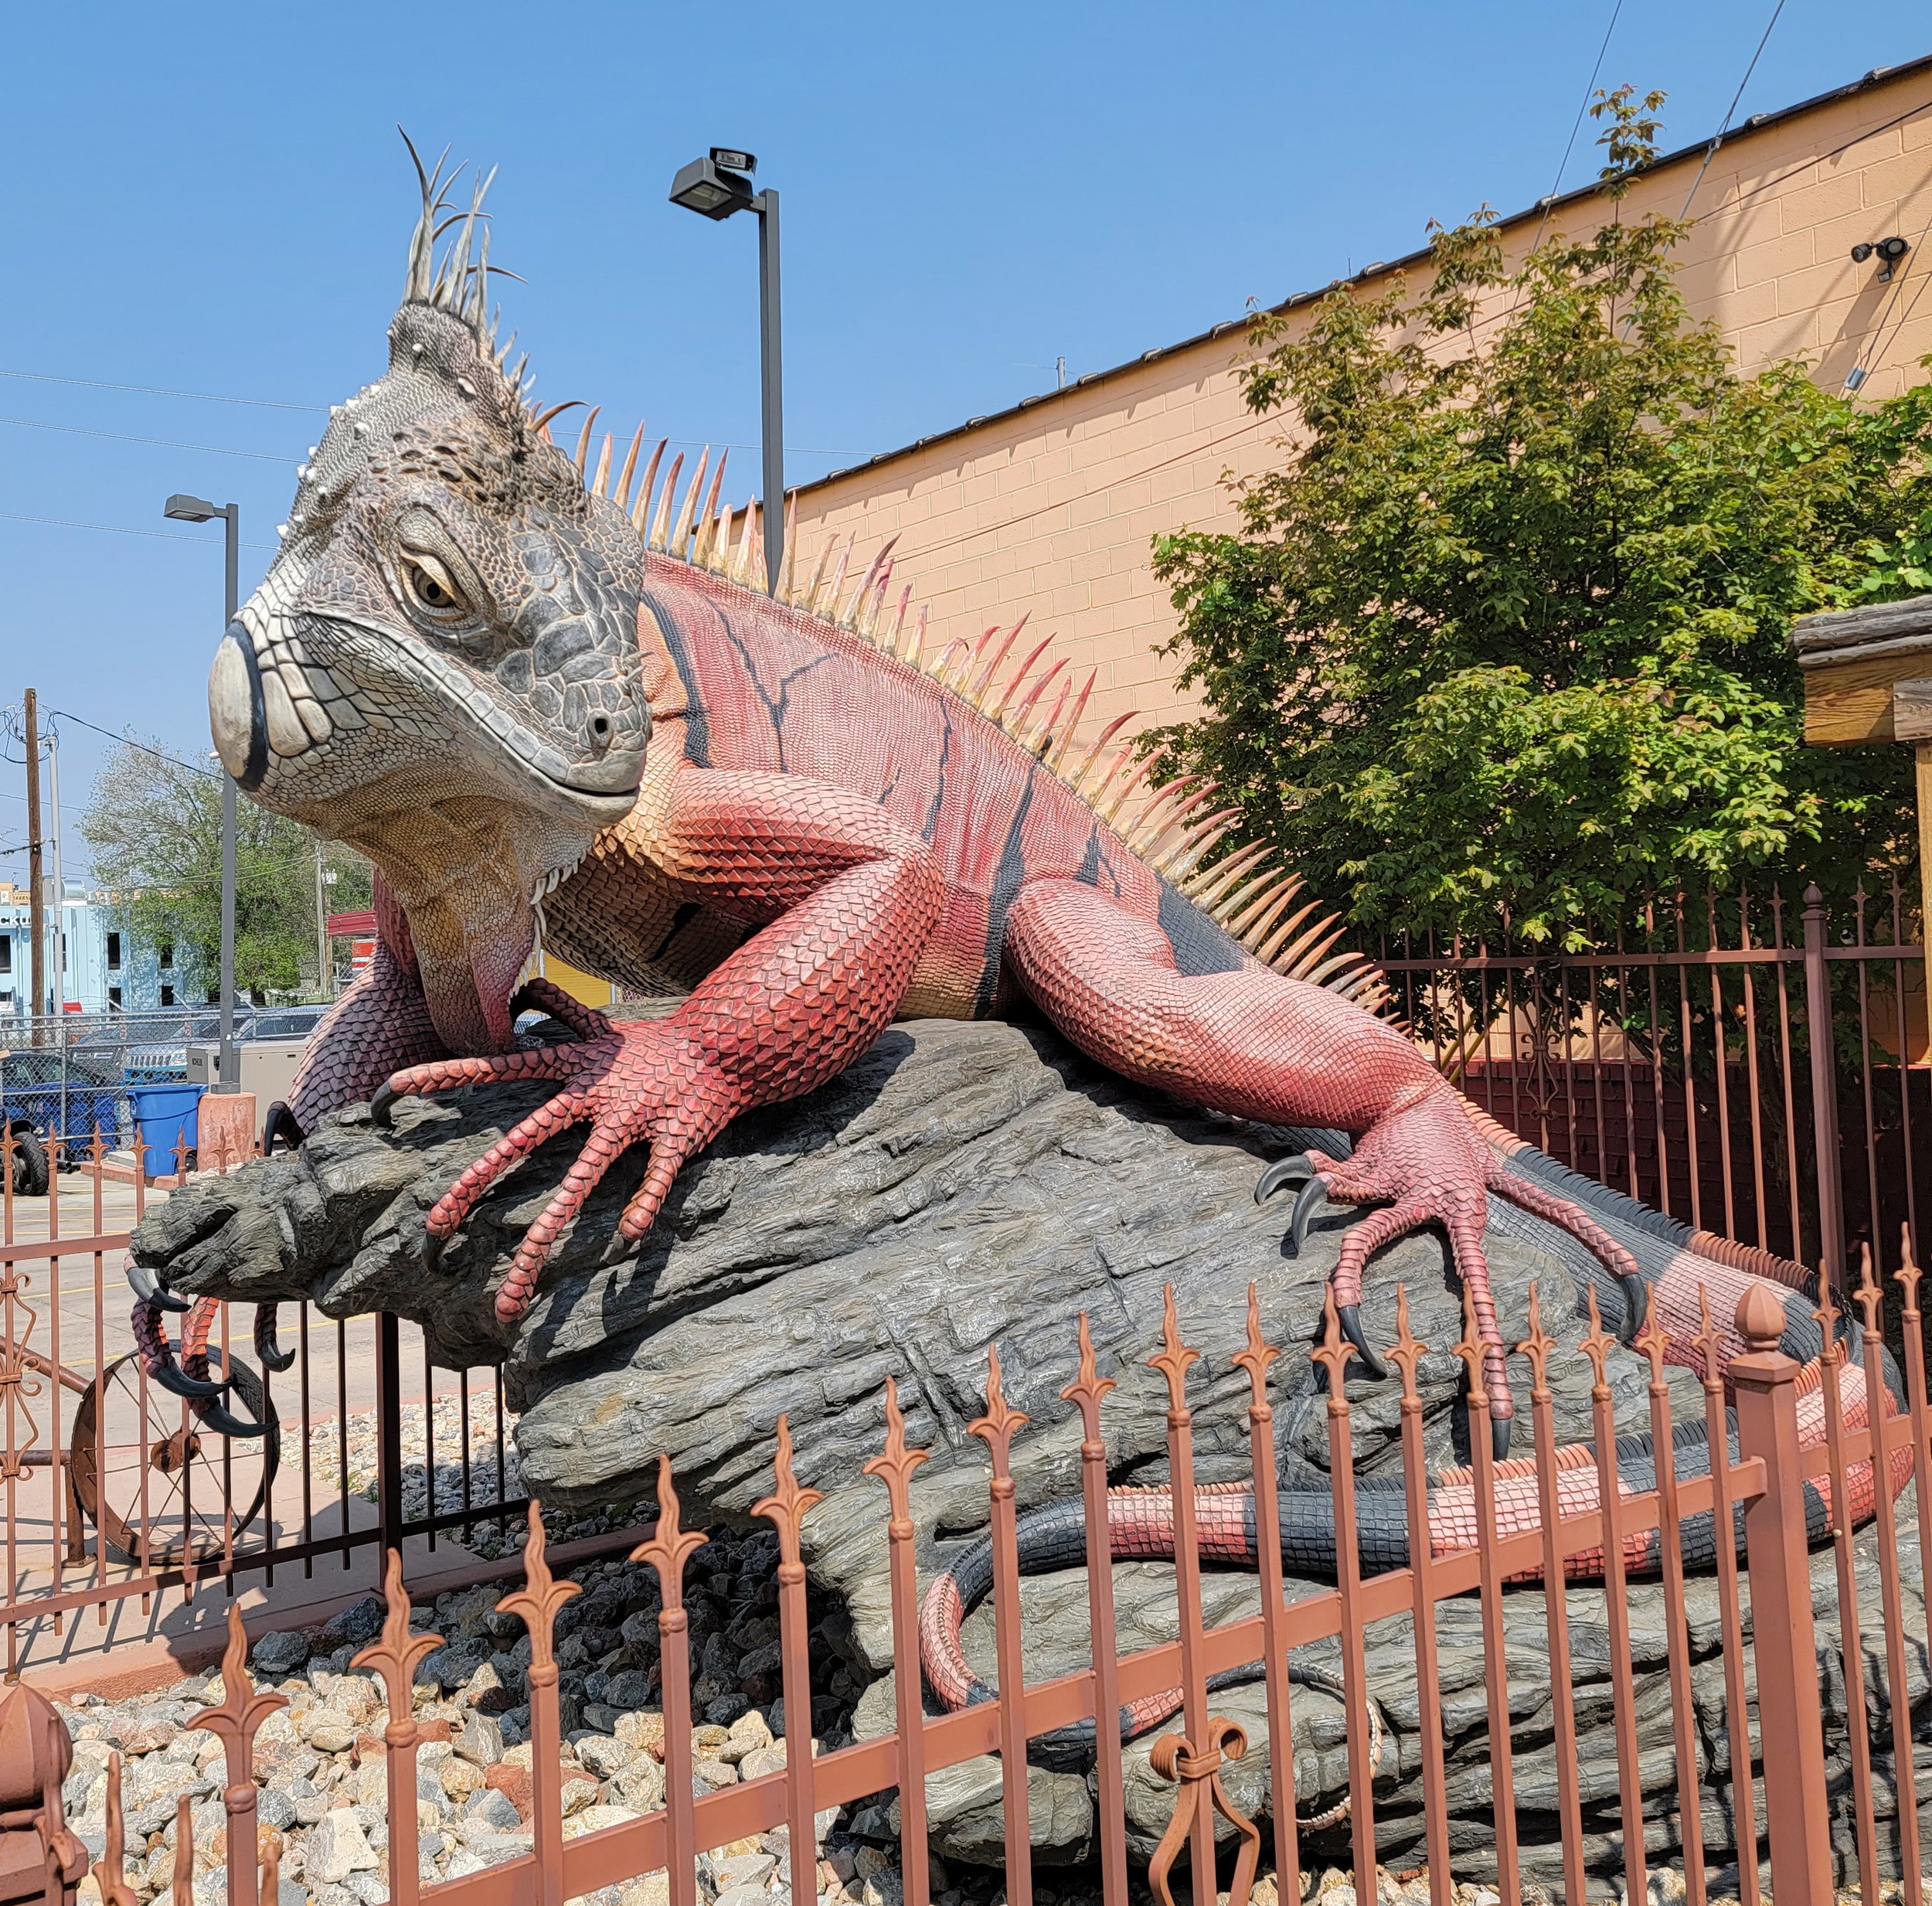  Sweet lifelike giant Iguana at the Red Iguana Mexican restaurant parking lot.  